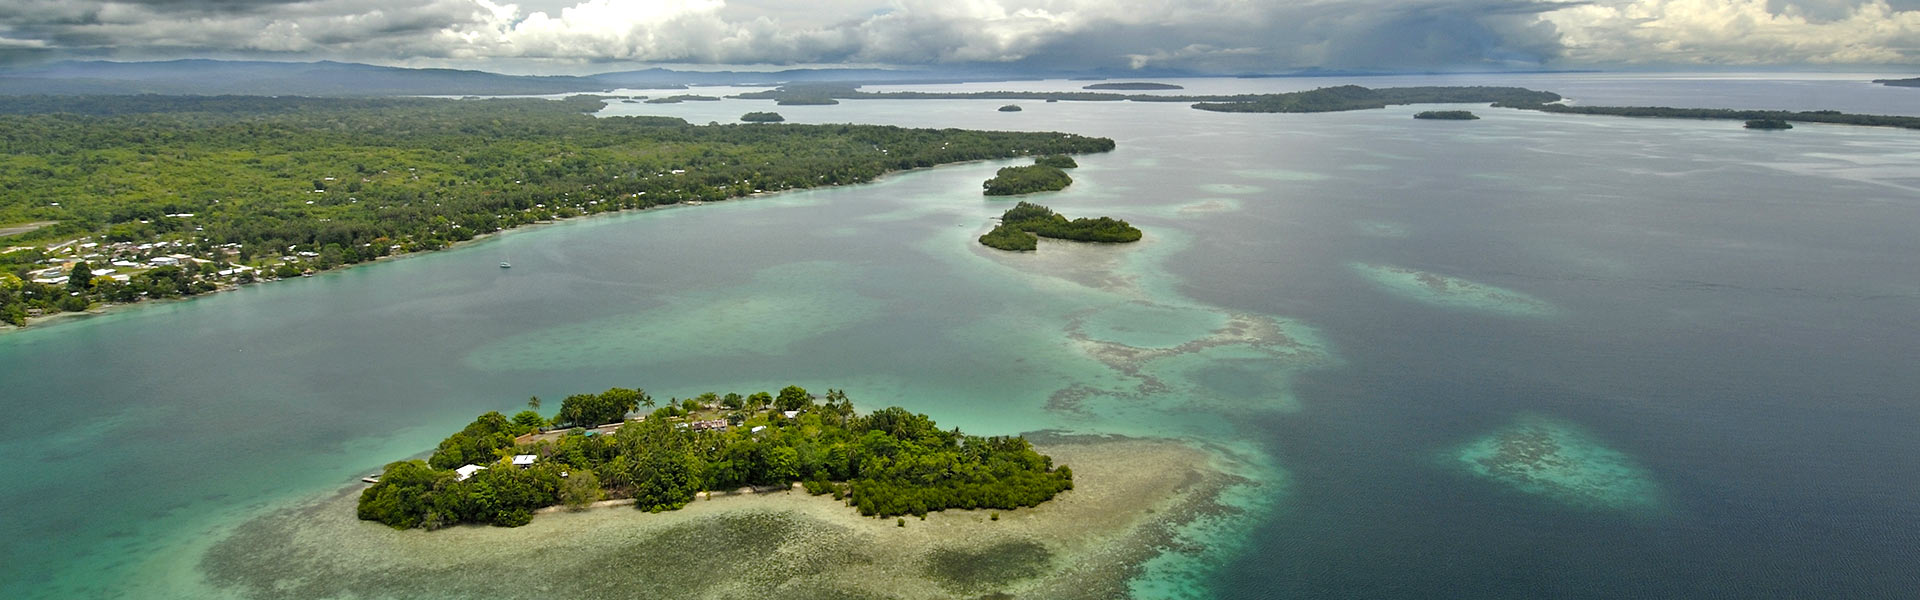 Solomon Islands Packages Banner Image